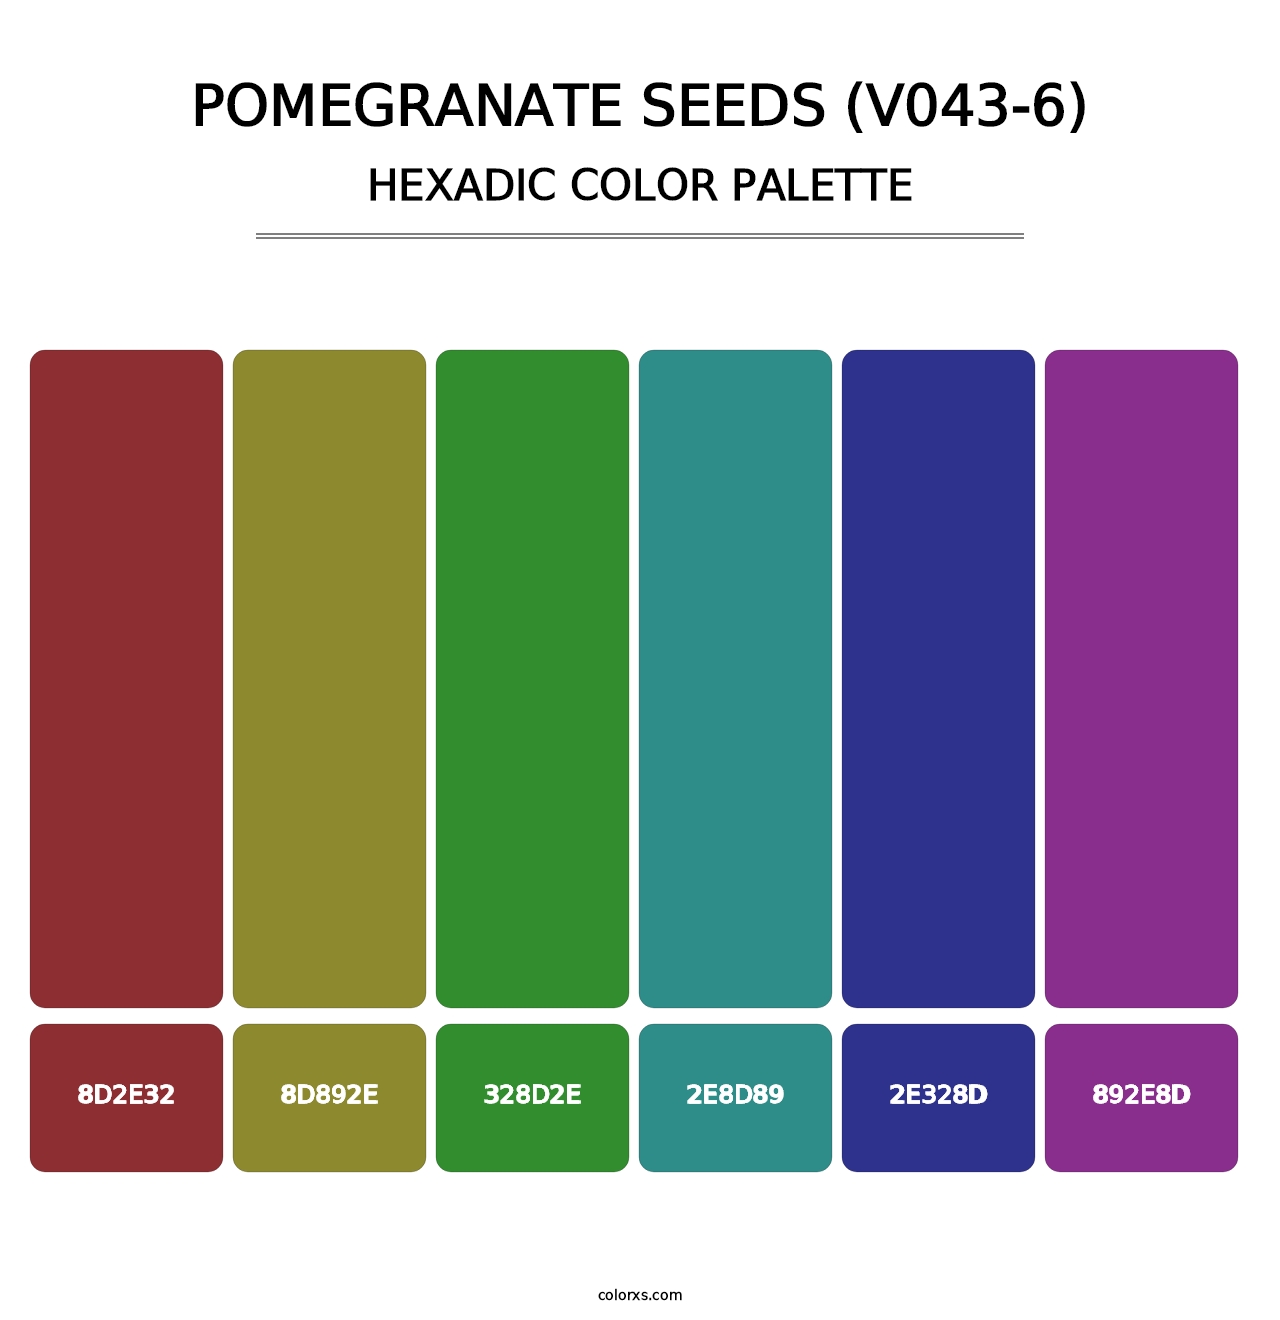 Pomegranate Seeds (V043-6) - Hexadic Color Palette